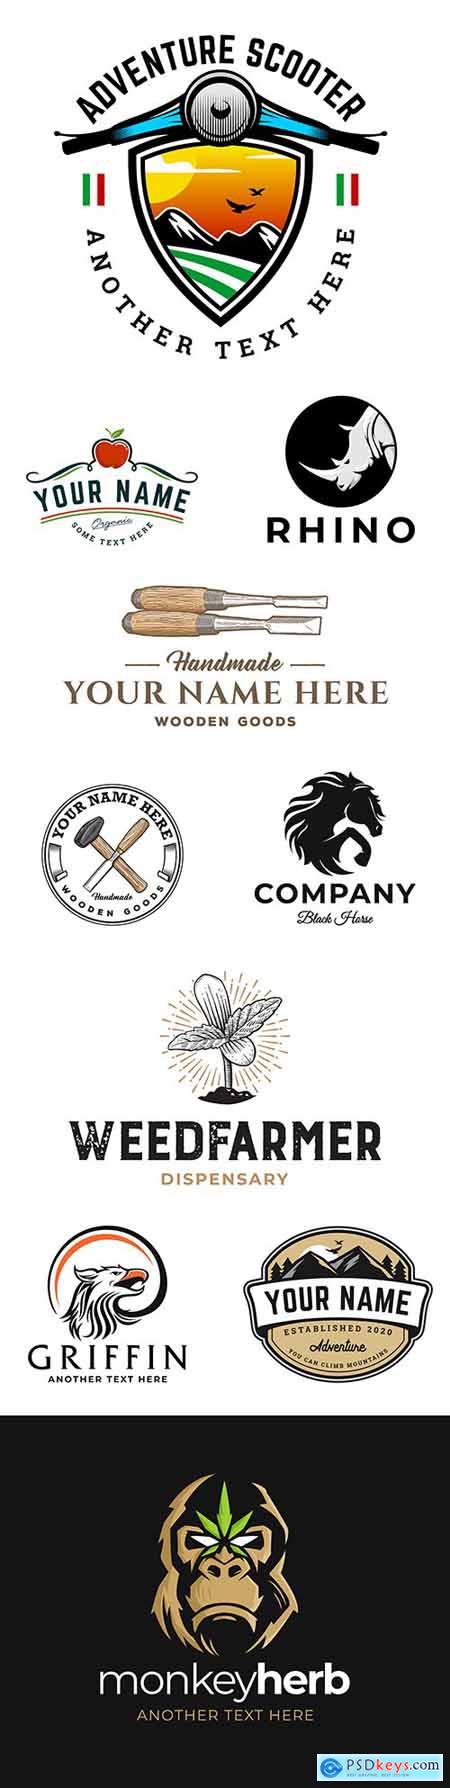 Brand name company logos business corporate design 15